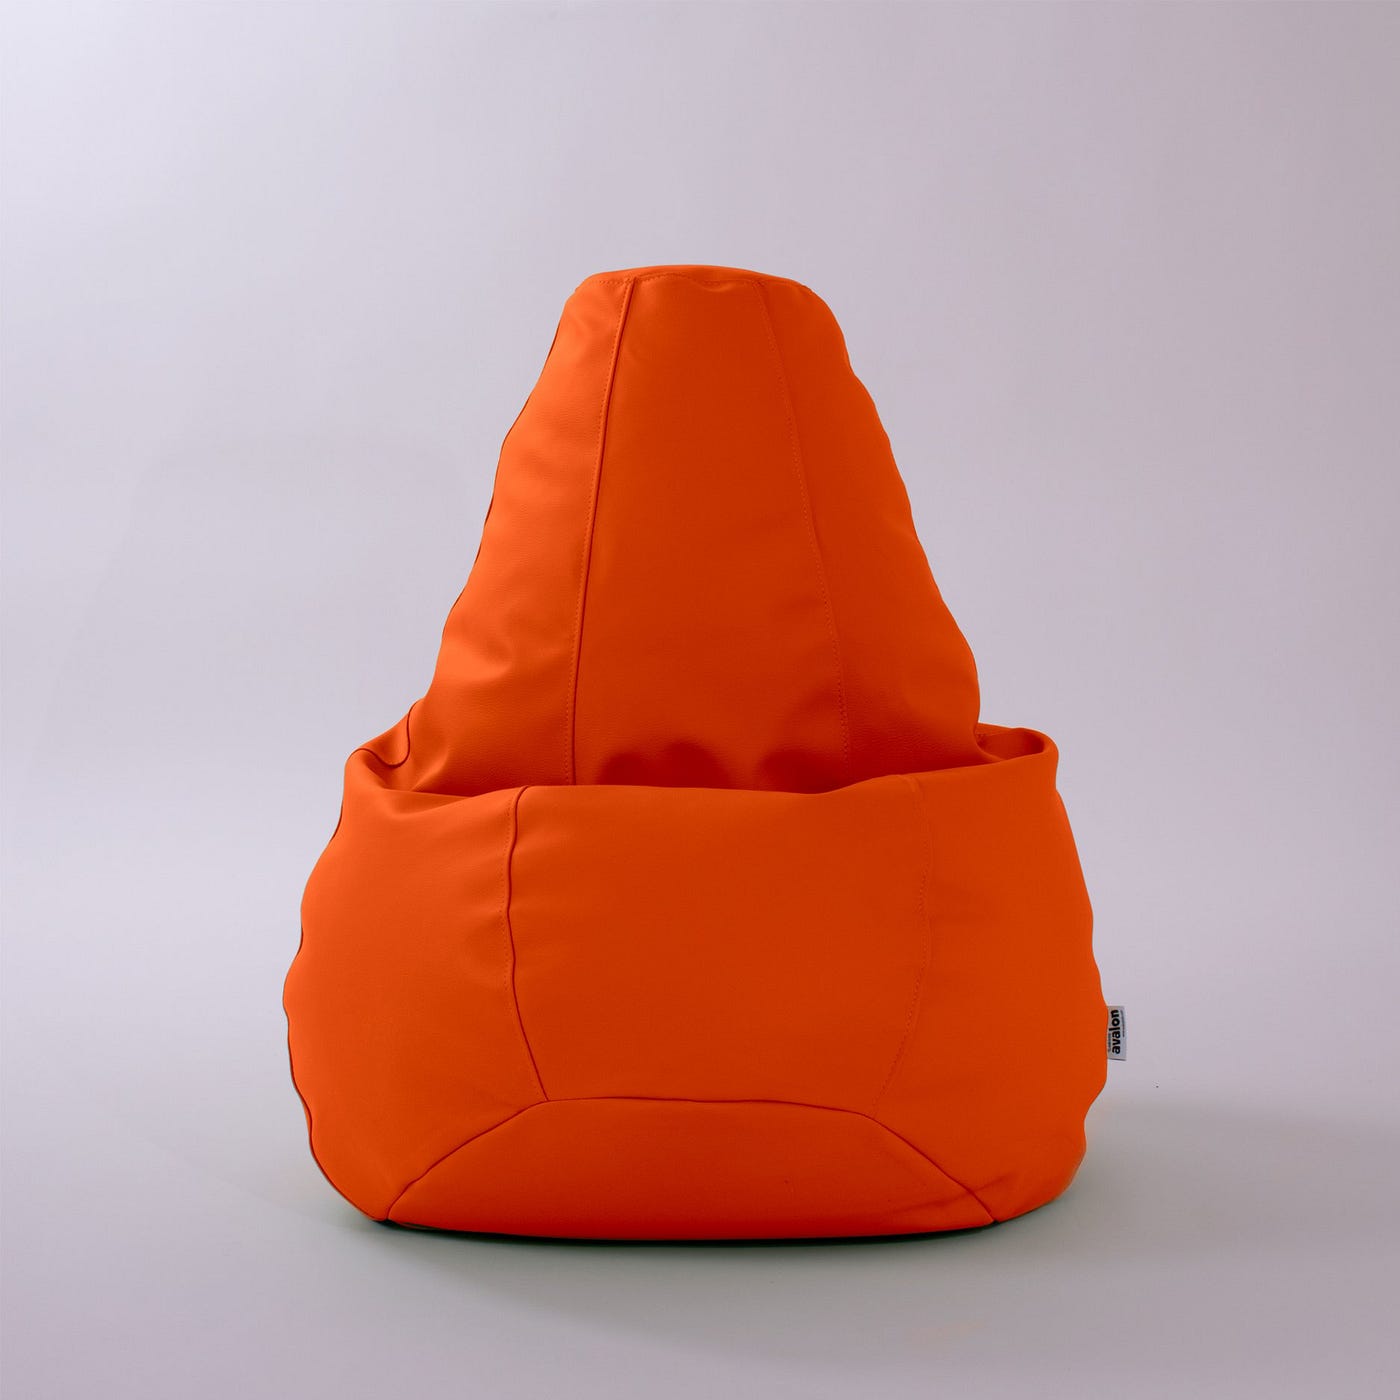 Cuscino gigante per bambini seduta comoda. Pouf sacco in ecopelle